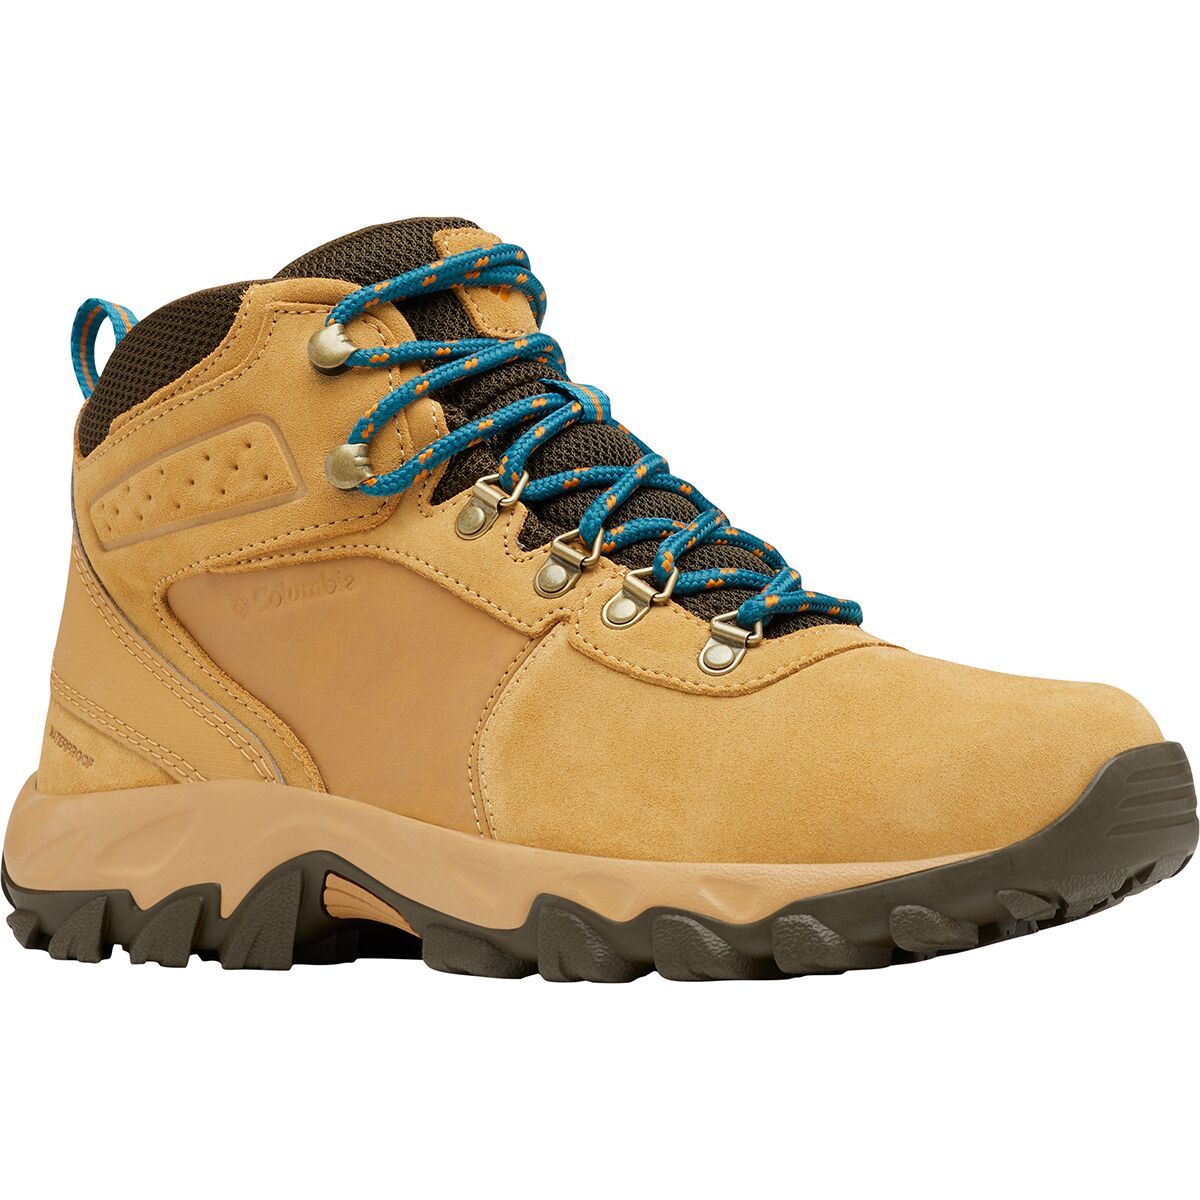 Newton Ridge Plus II Suede WP Hiking Boot - Men